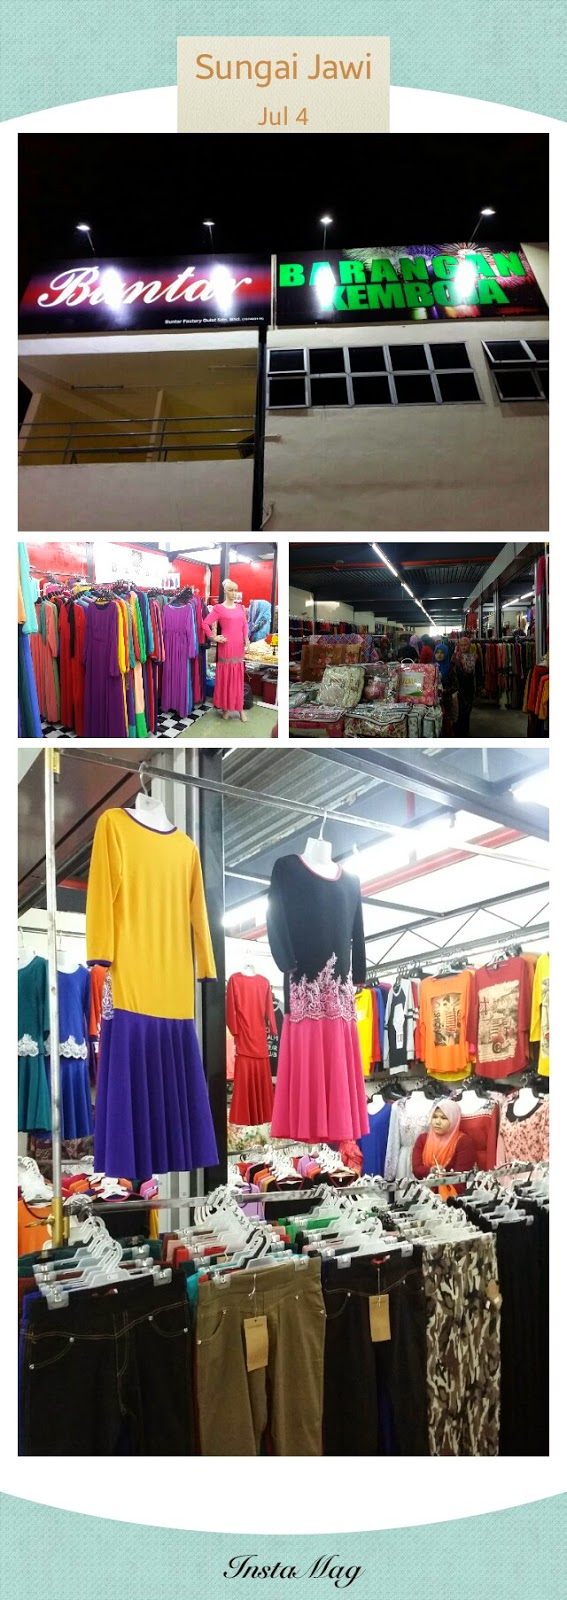 SayangkuZie: Bazaar Pasar Kemboja Parit Buntar dibuka Setiap Hari